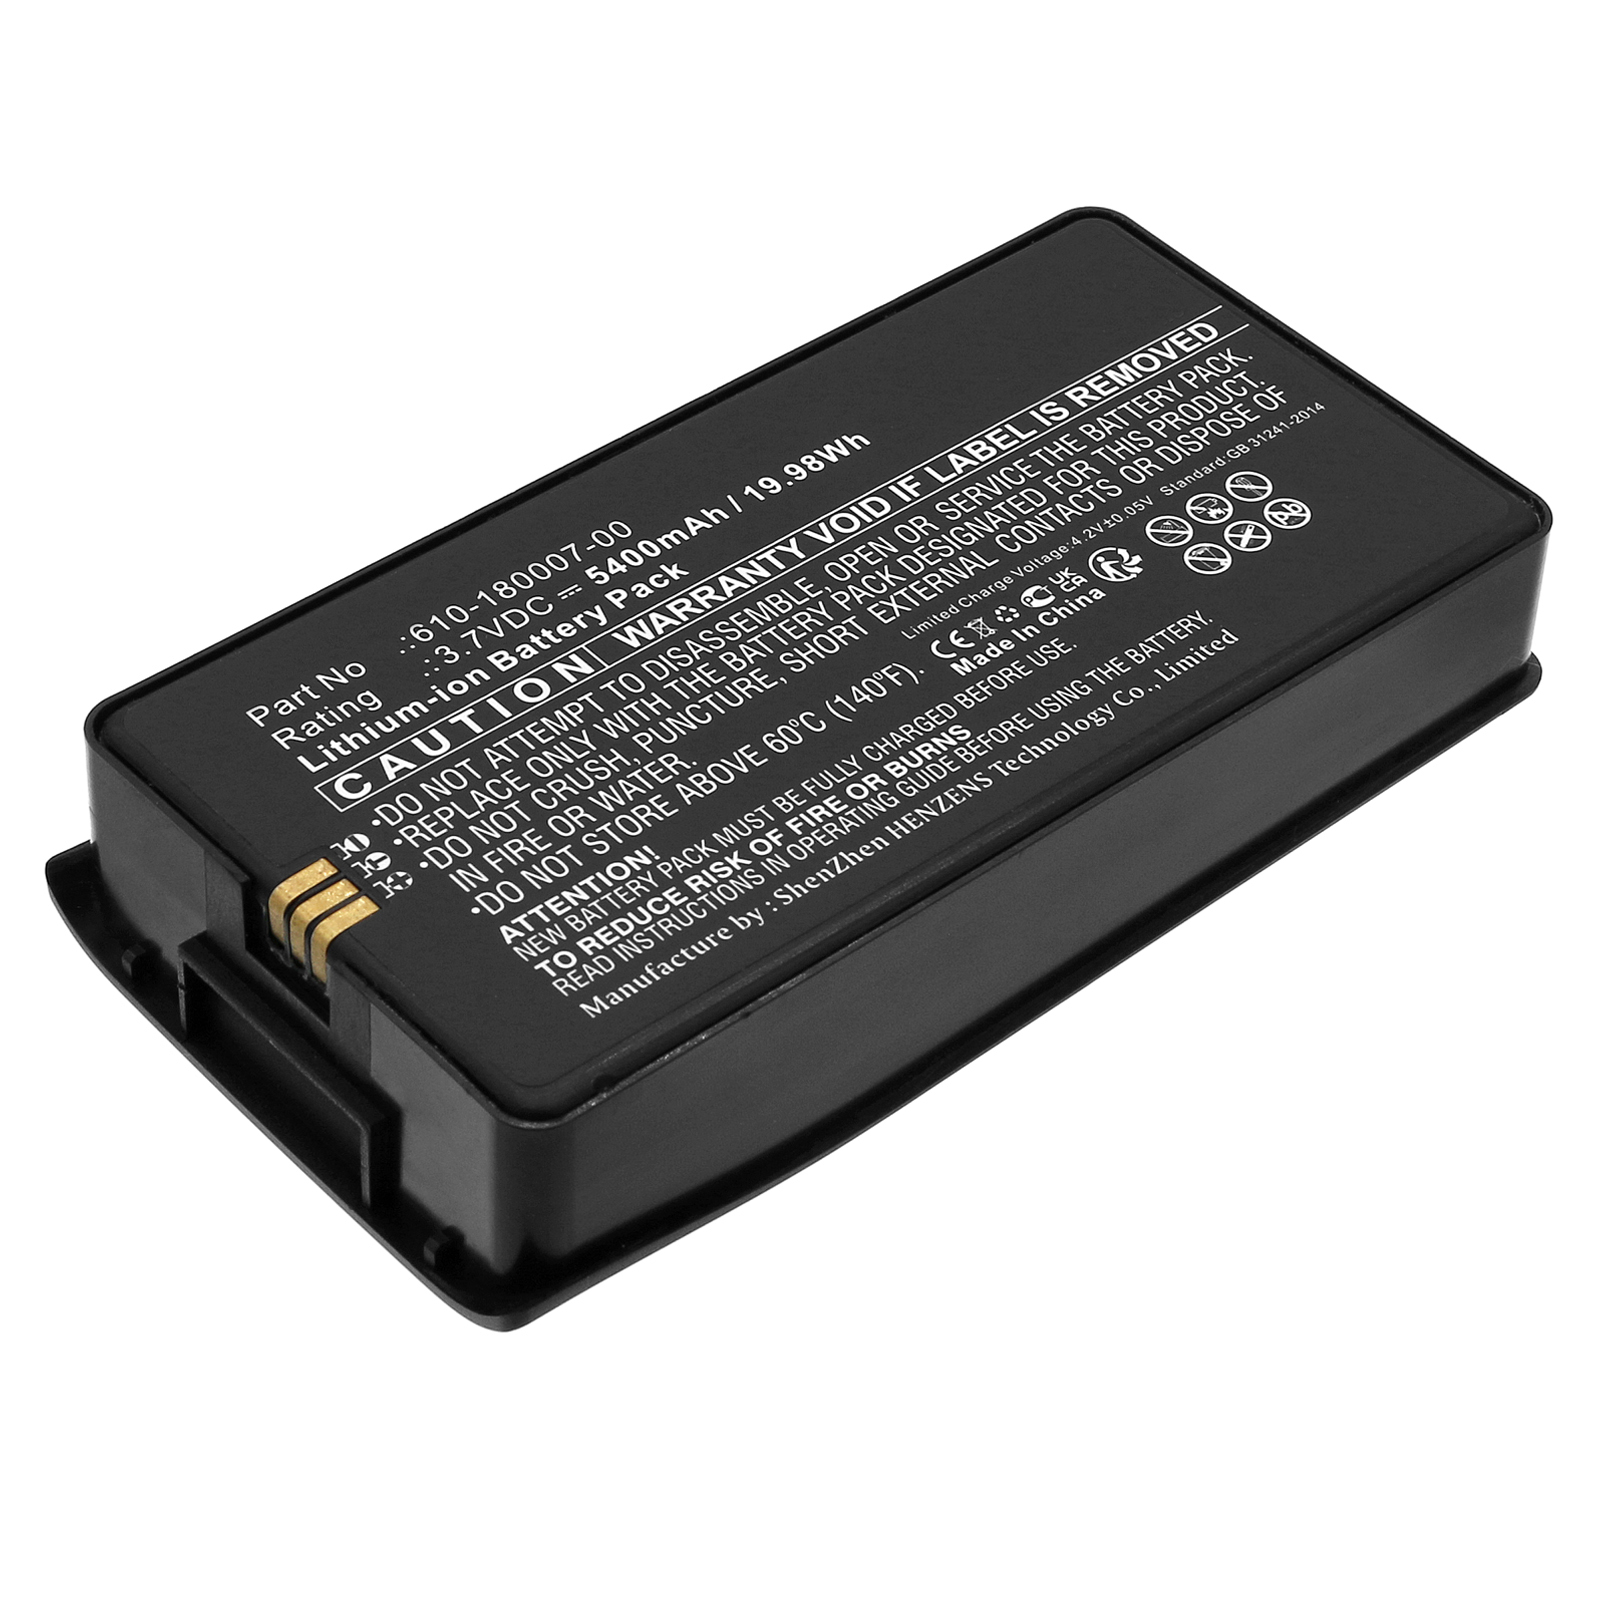 Synergy Digital Barcode Scanner Battery, Compatible with RGIS 610-180007-00 Barcode Scanner Battery (Li-ion, 3.7V, 5400mAh)